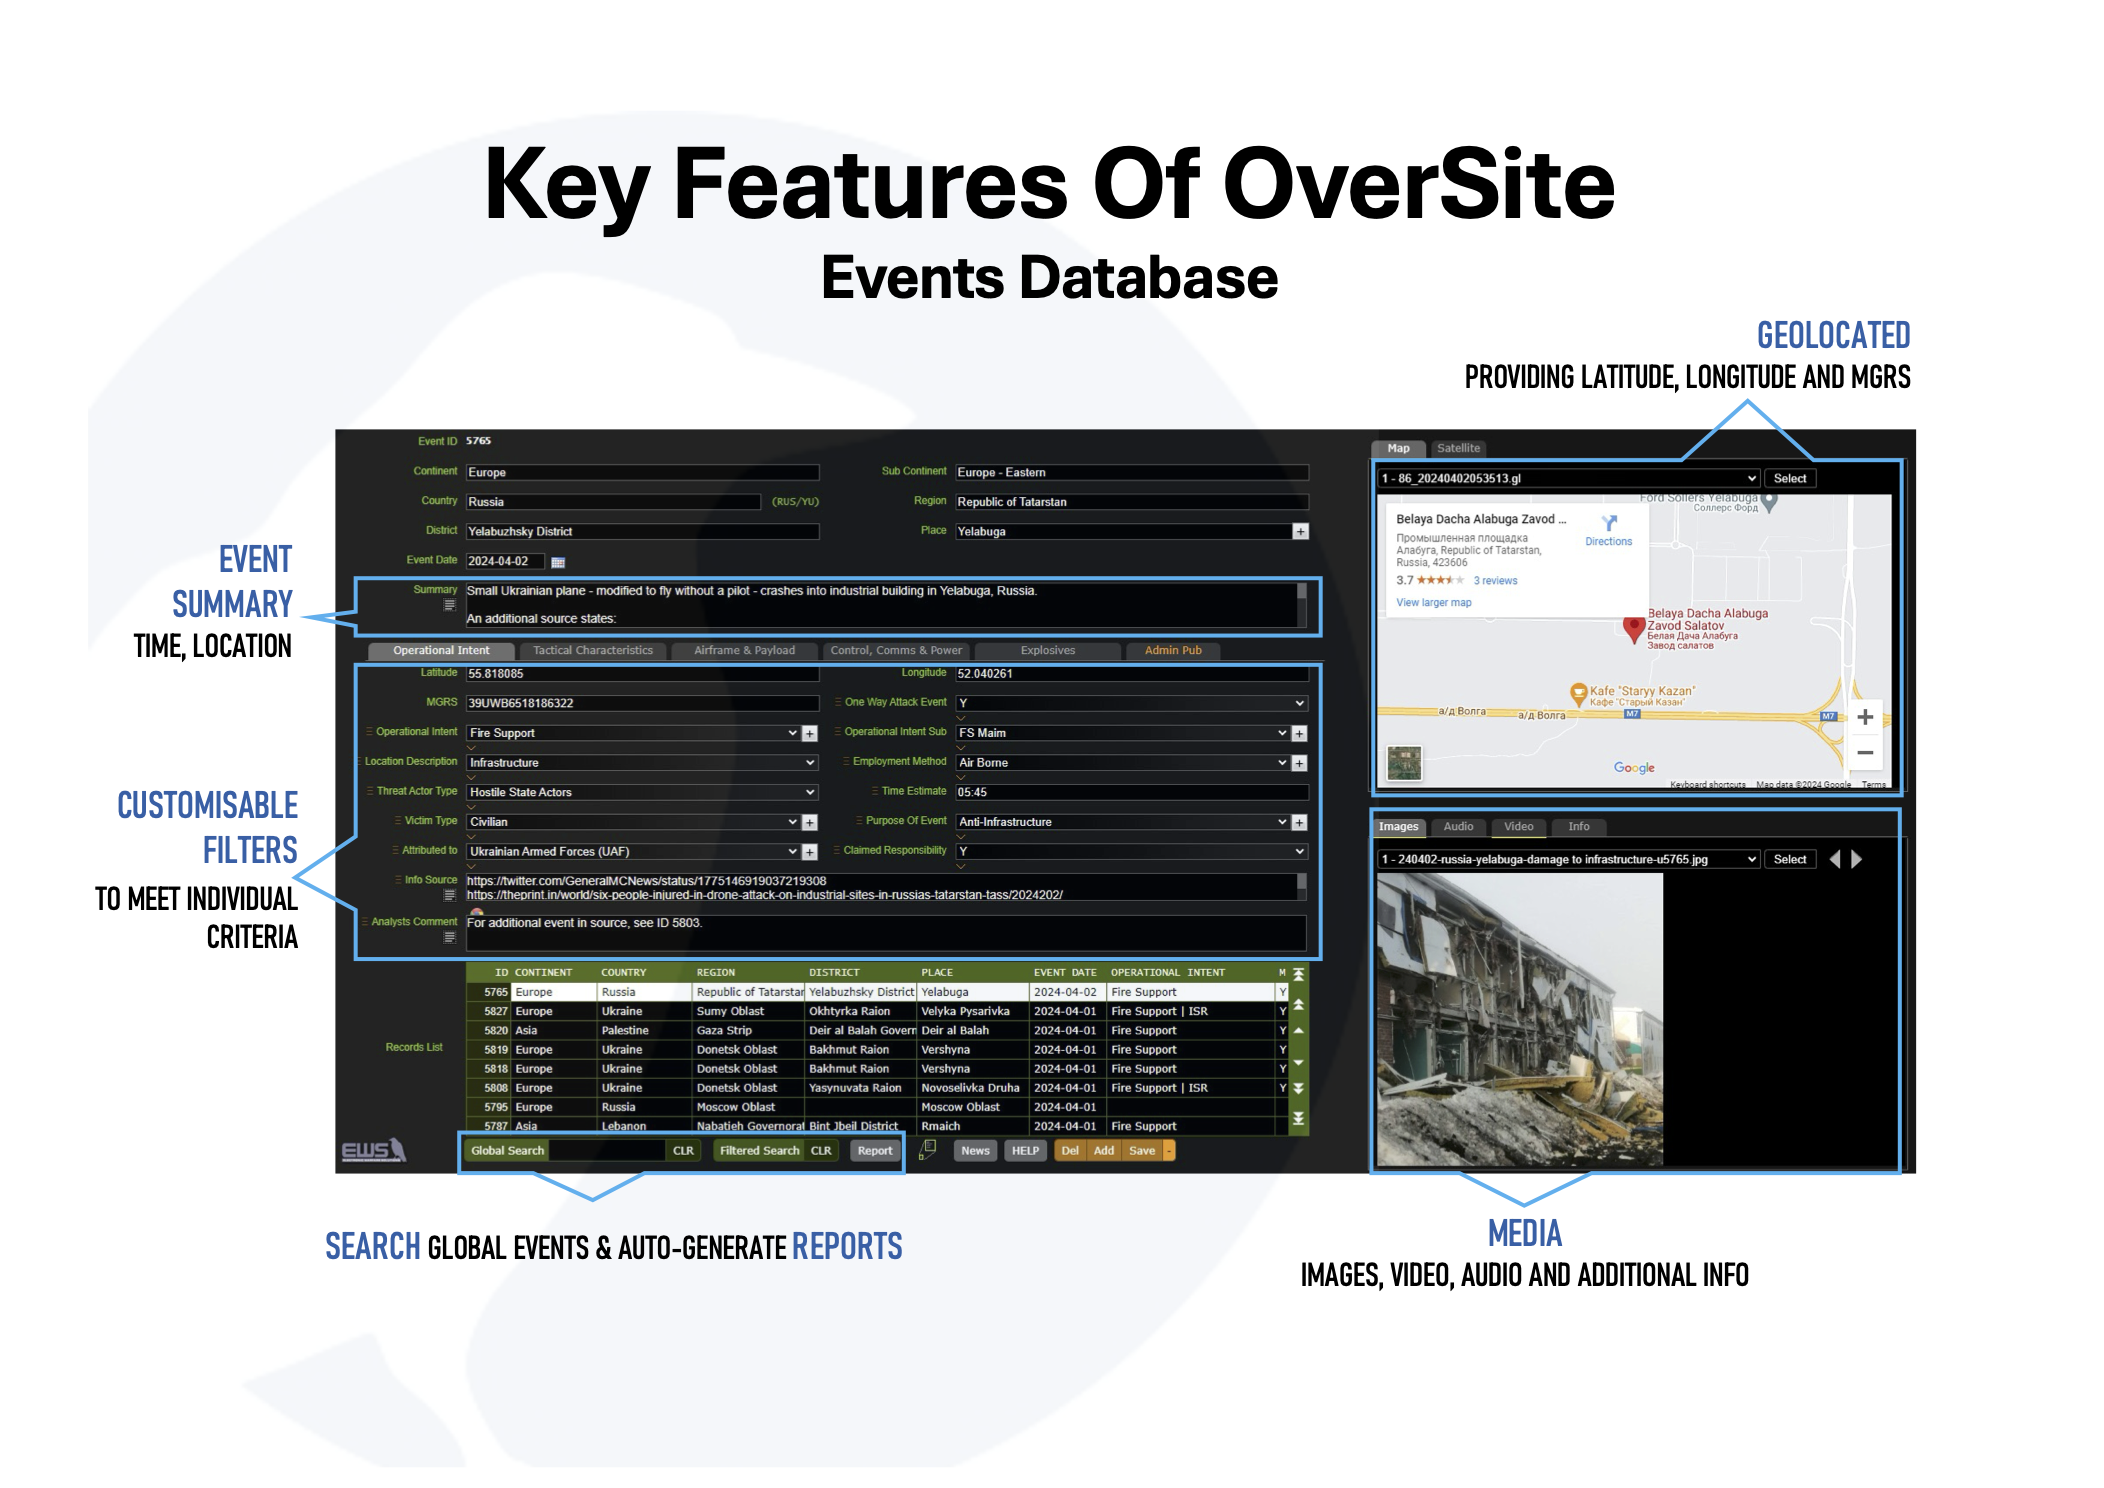 OverSite done database from EWS